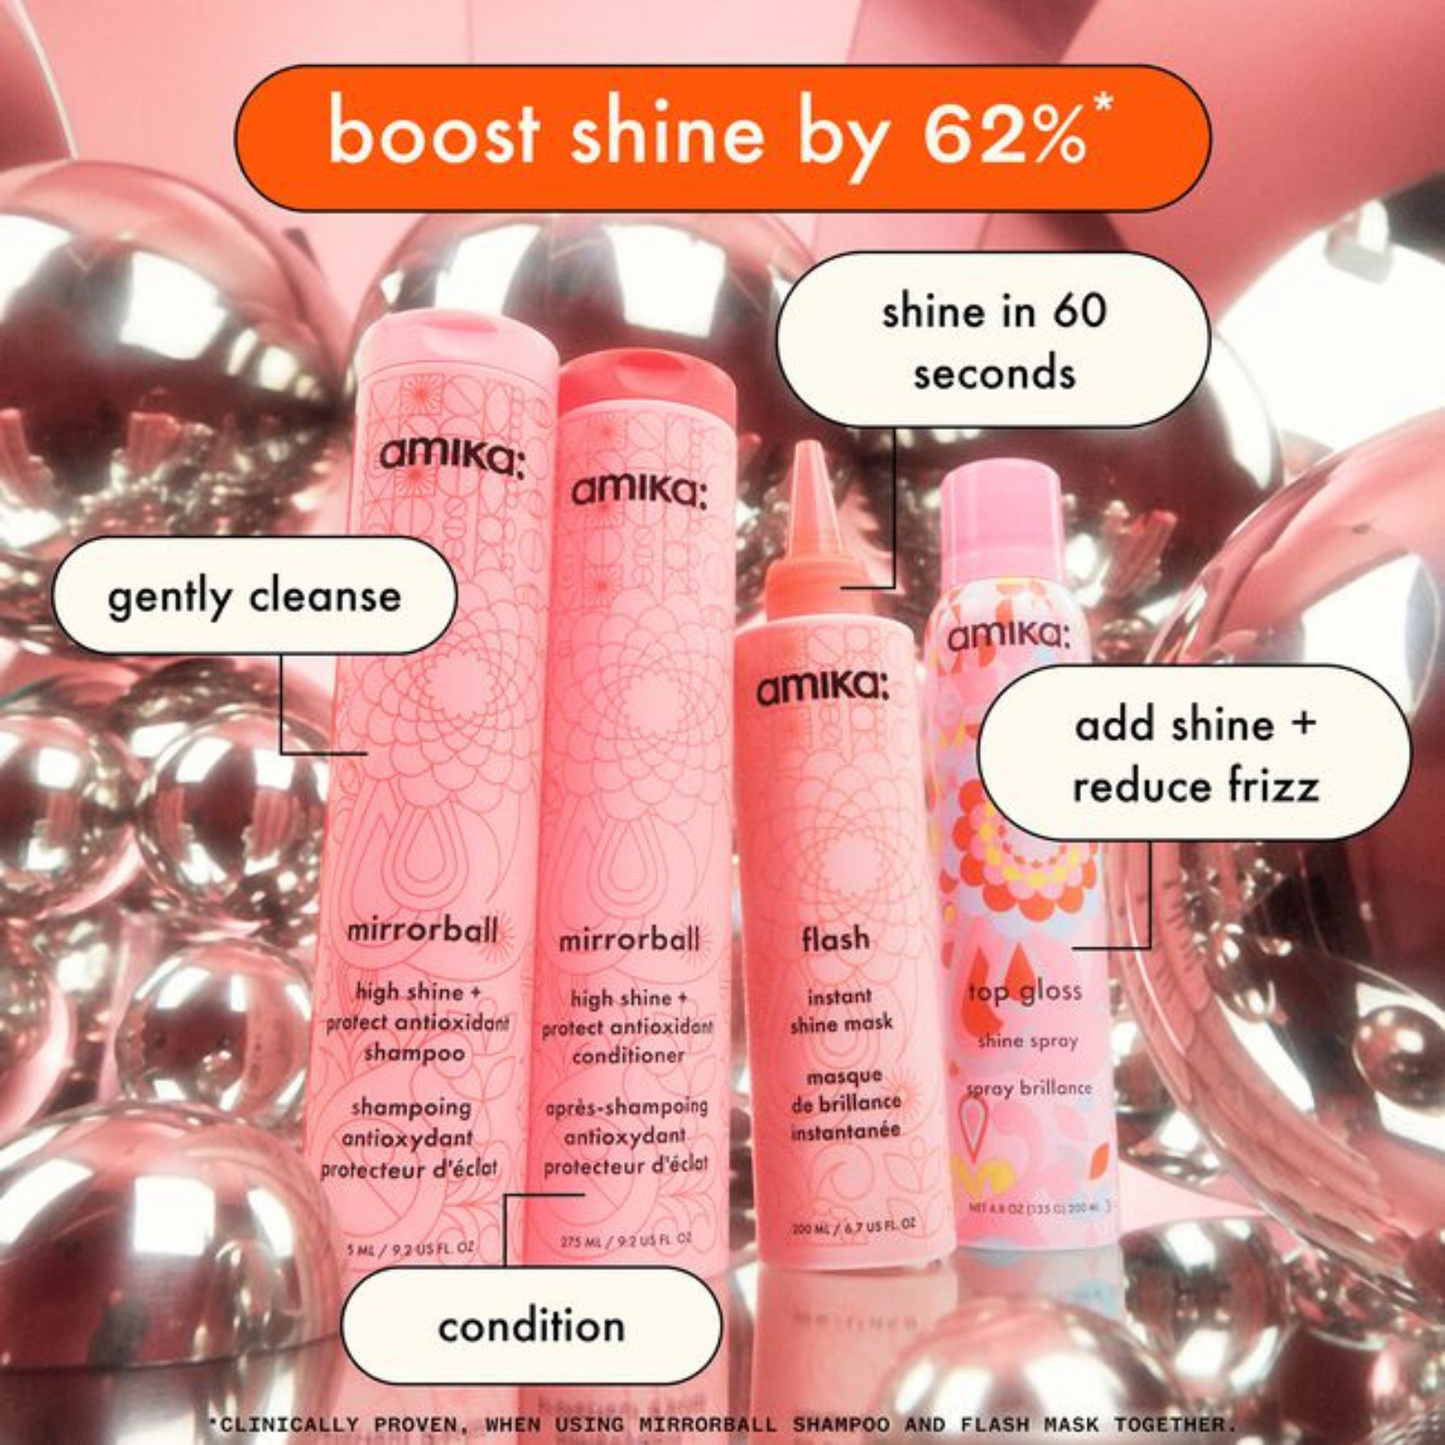 amika - Top Gloss Shine Spray